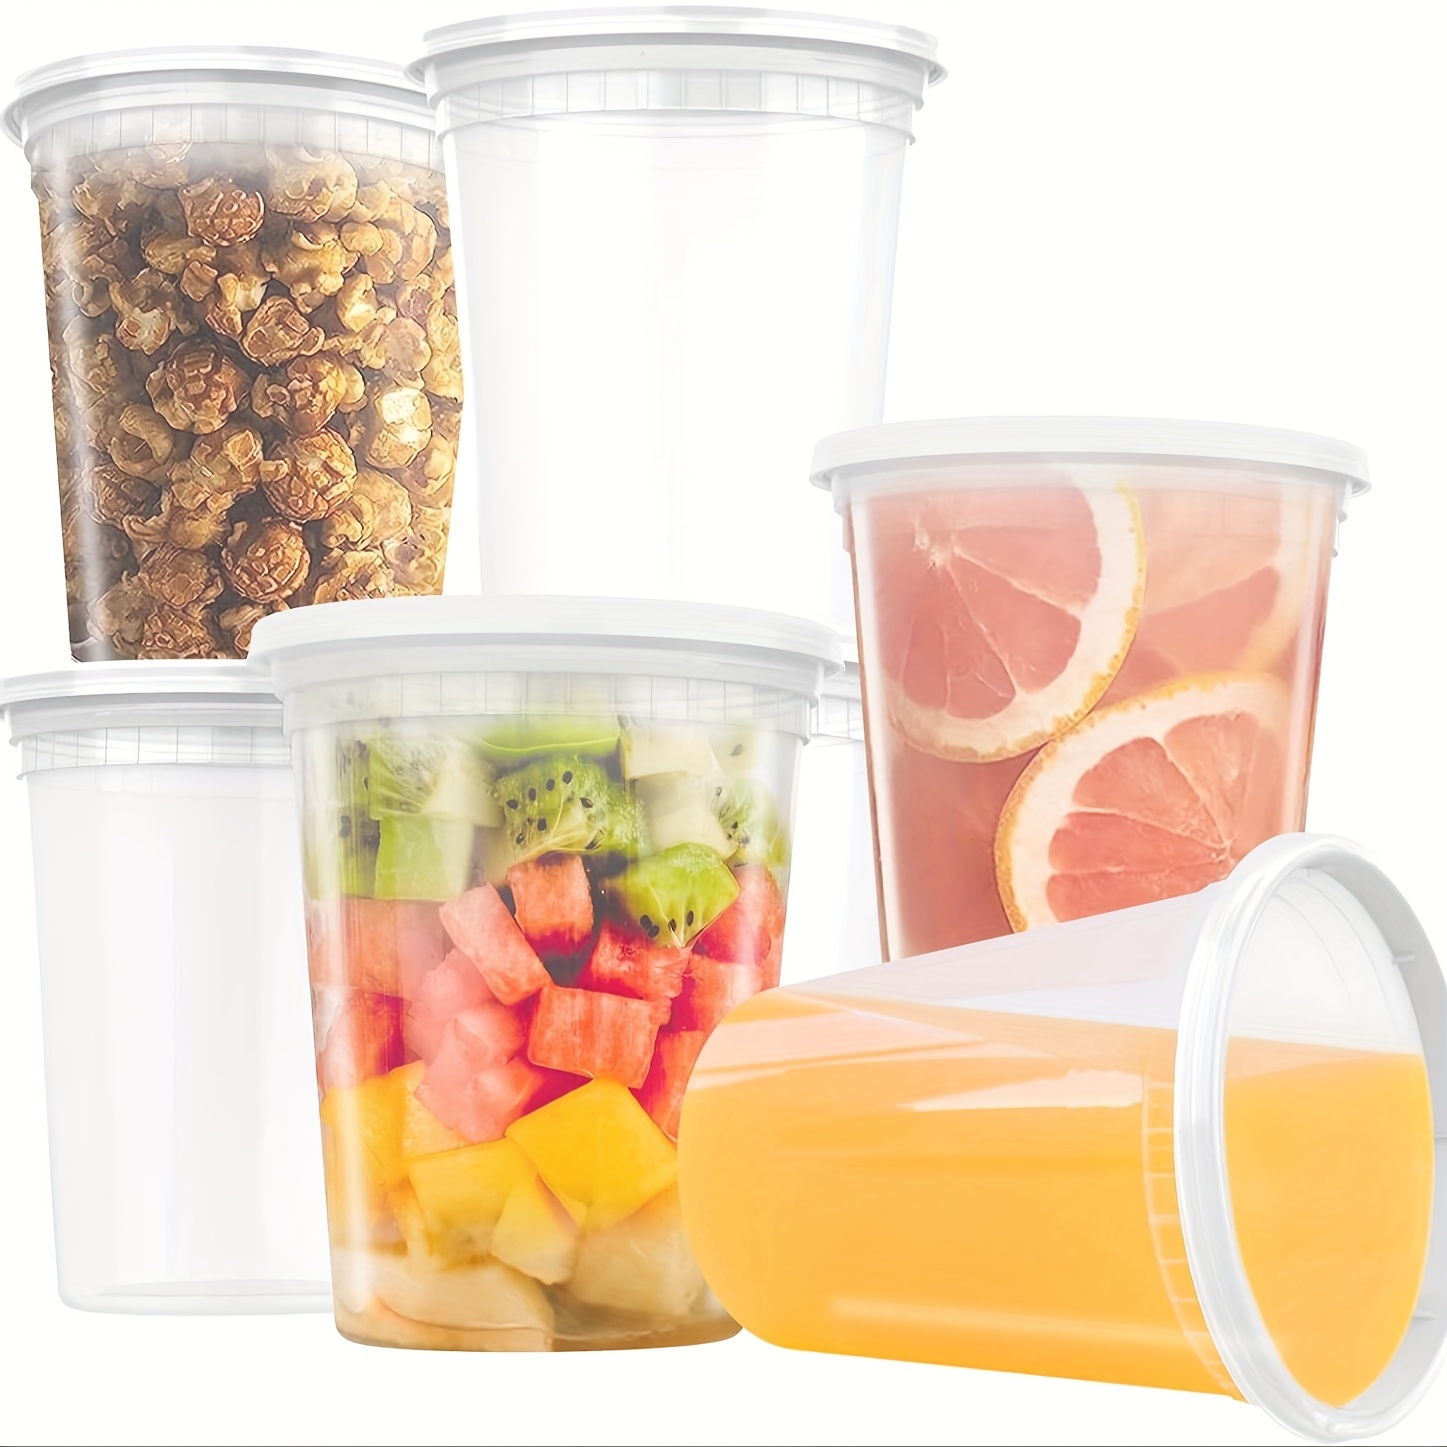 PRI Plastic Food Containers Takeaway Microwave Freezer Safe Storage Boxes  LIDS